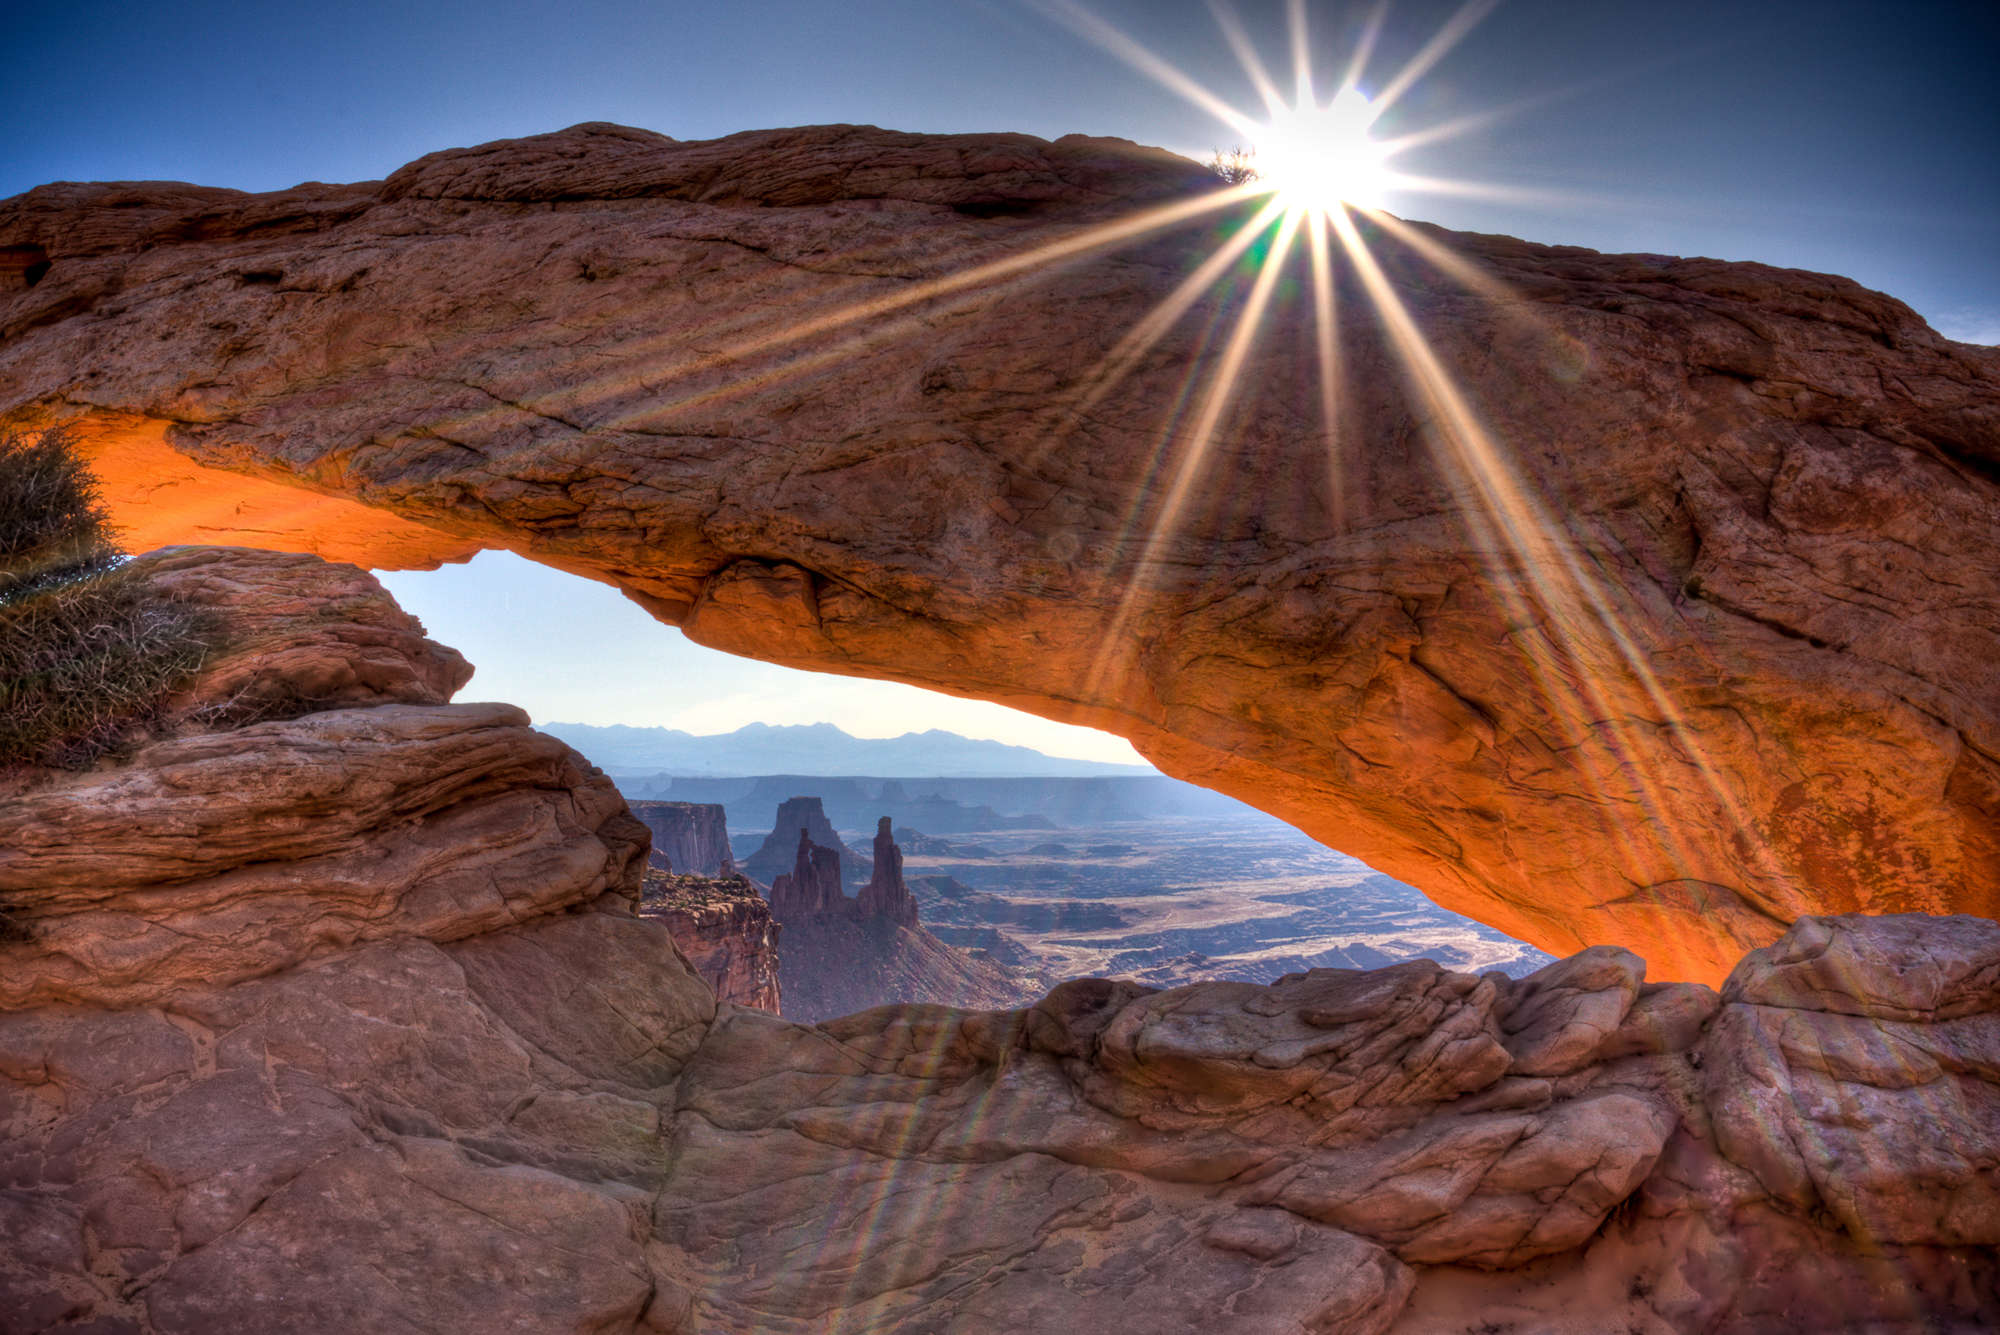             Fototapete Canyon mit Mesa Arch – Premium Glattvlies
        